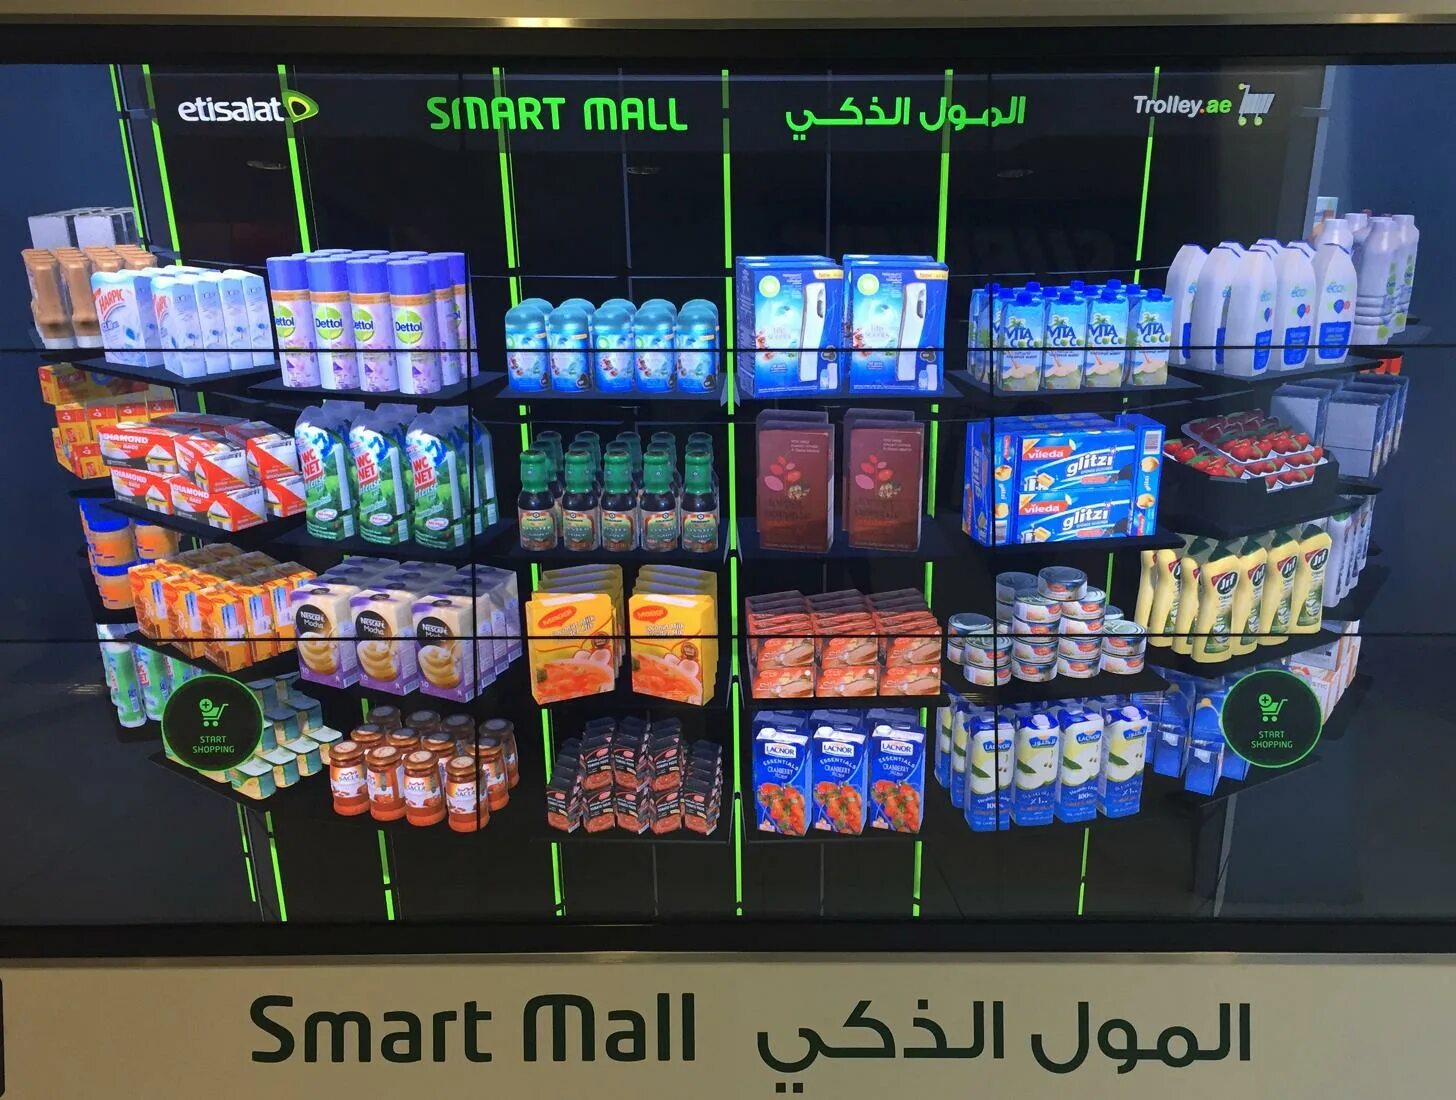 Смарт магазин. Умный магазин. Etisalat Dubai Mall. Dubai Trolley. Experience shop